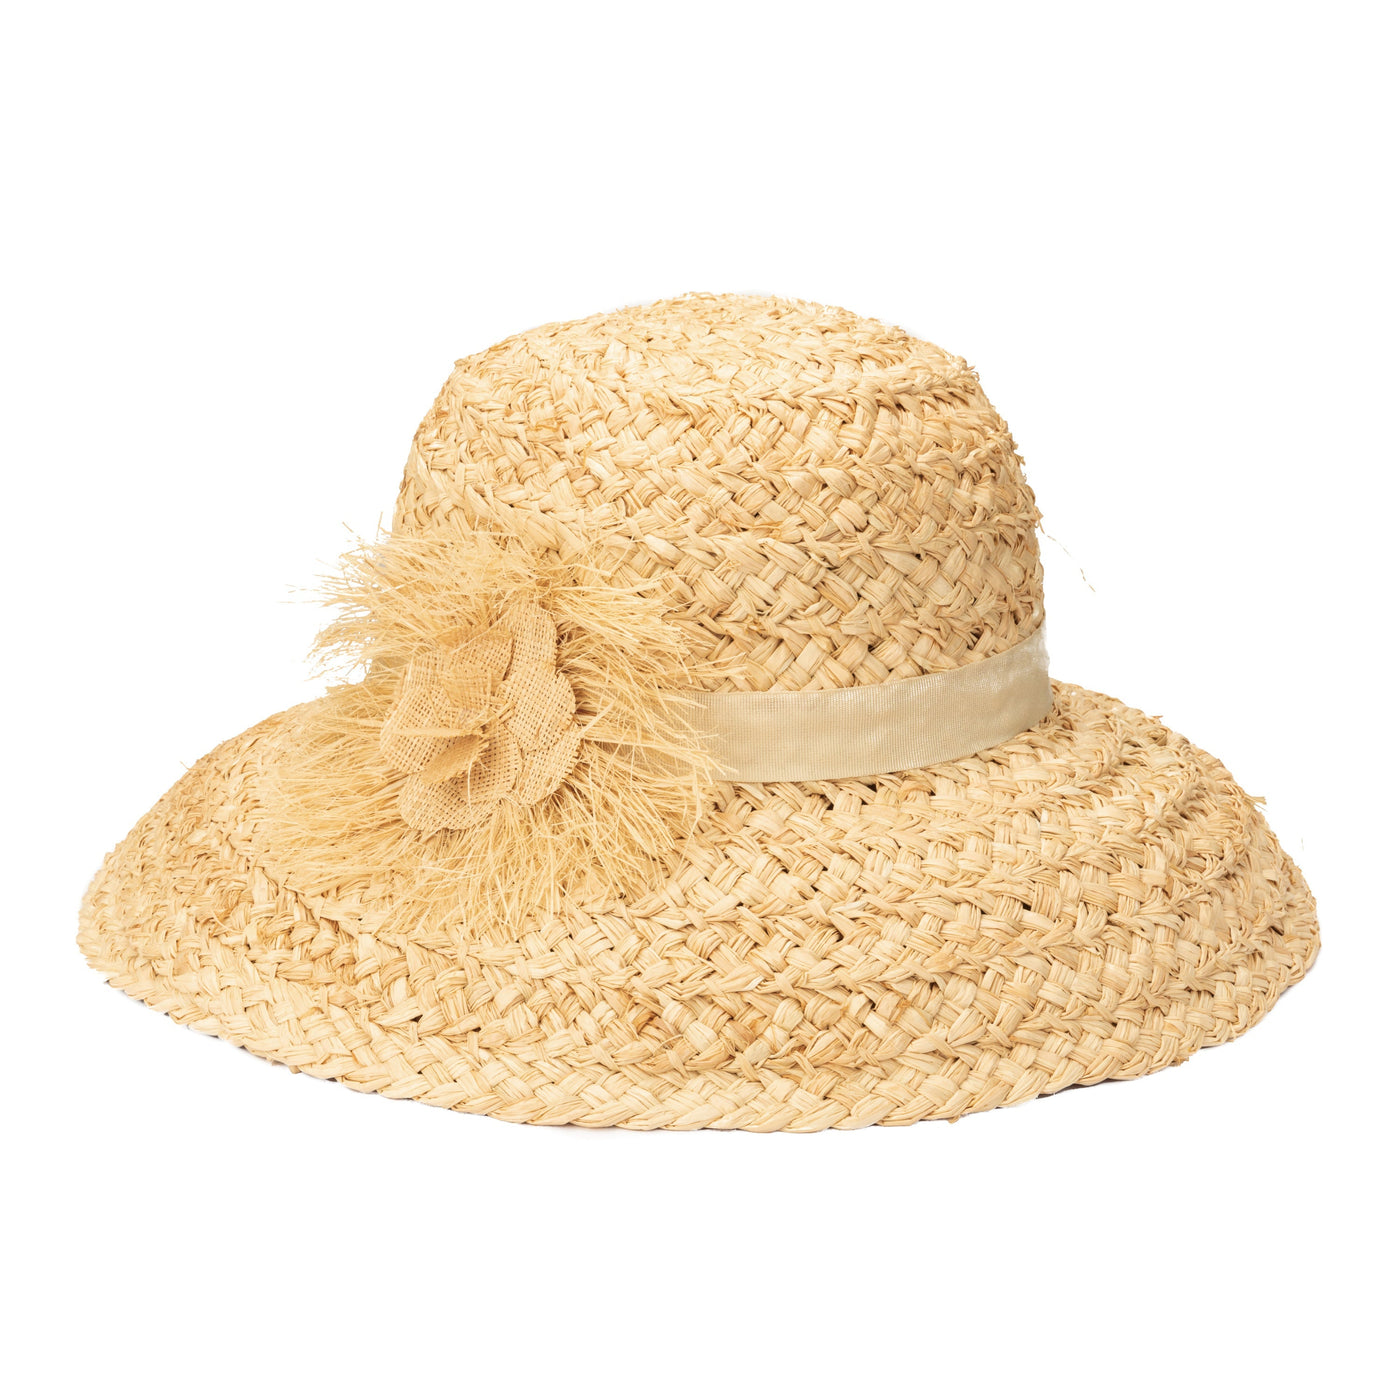 BUCKET - The Bella Bucket Sun Hat